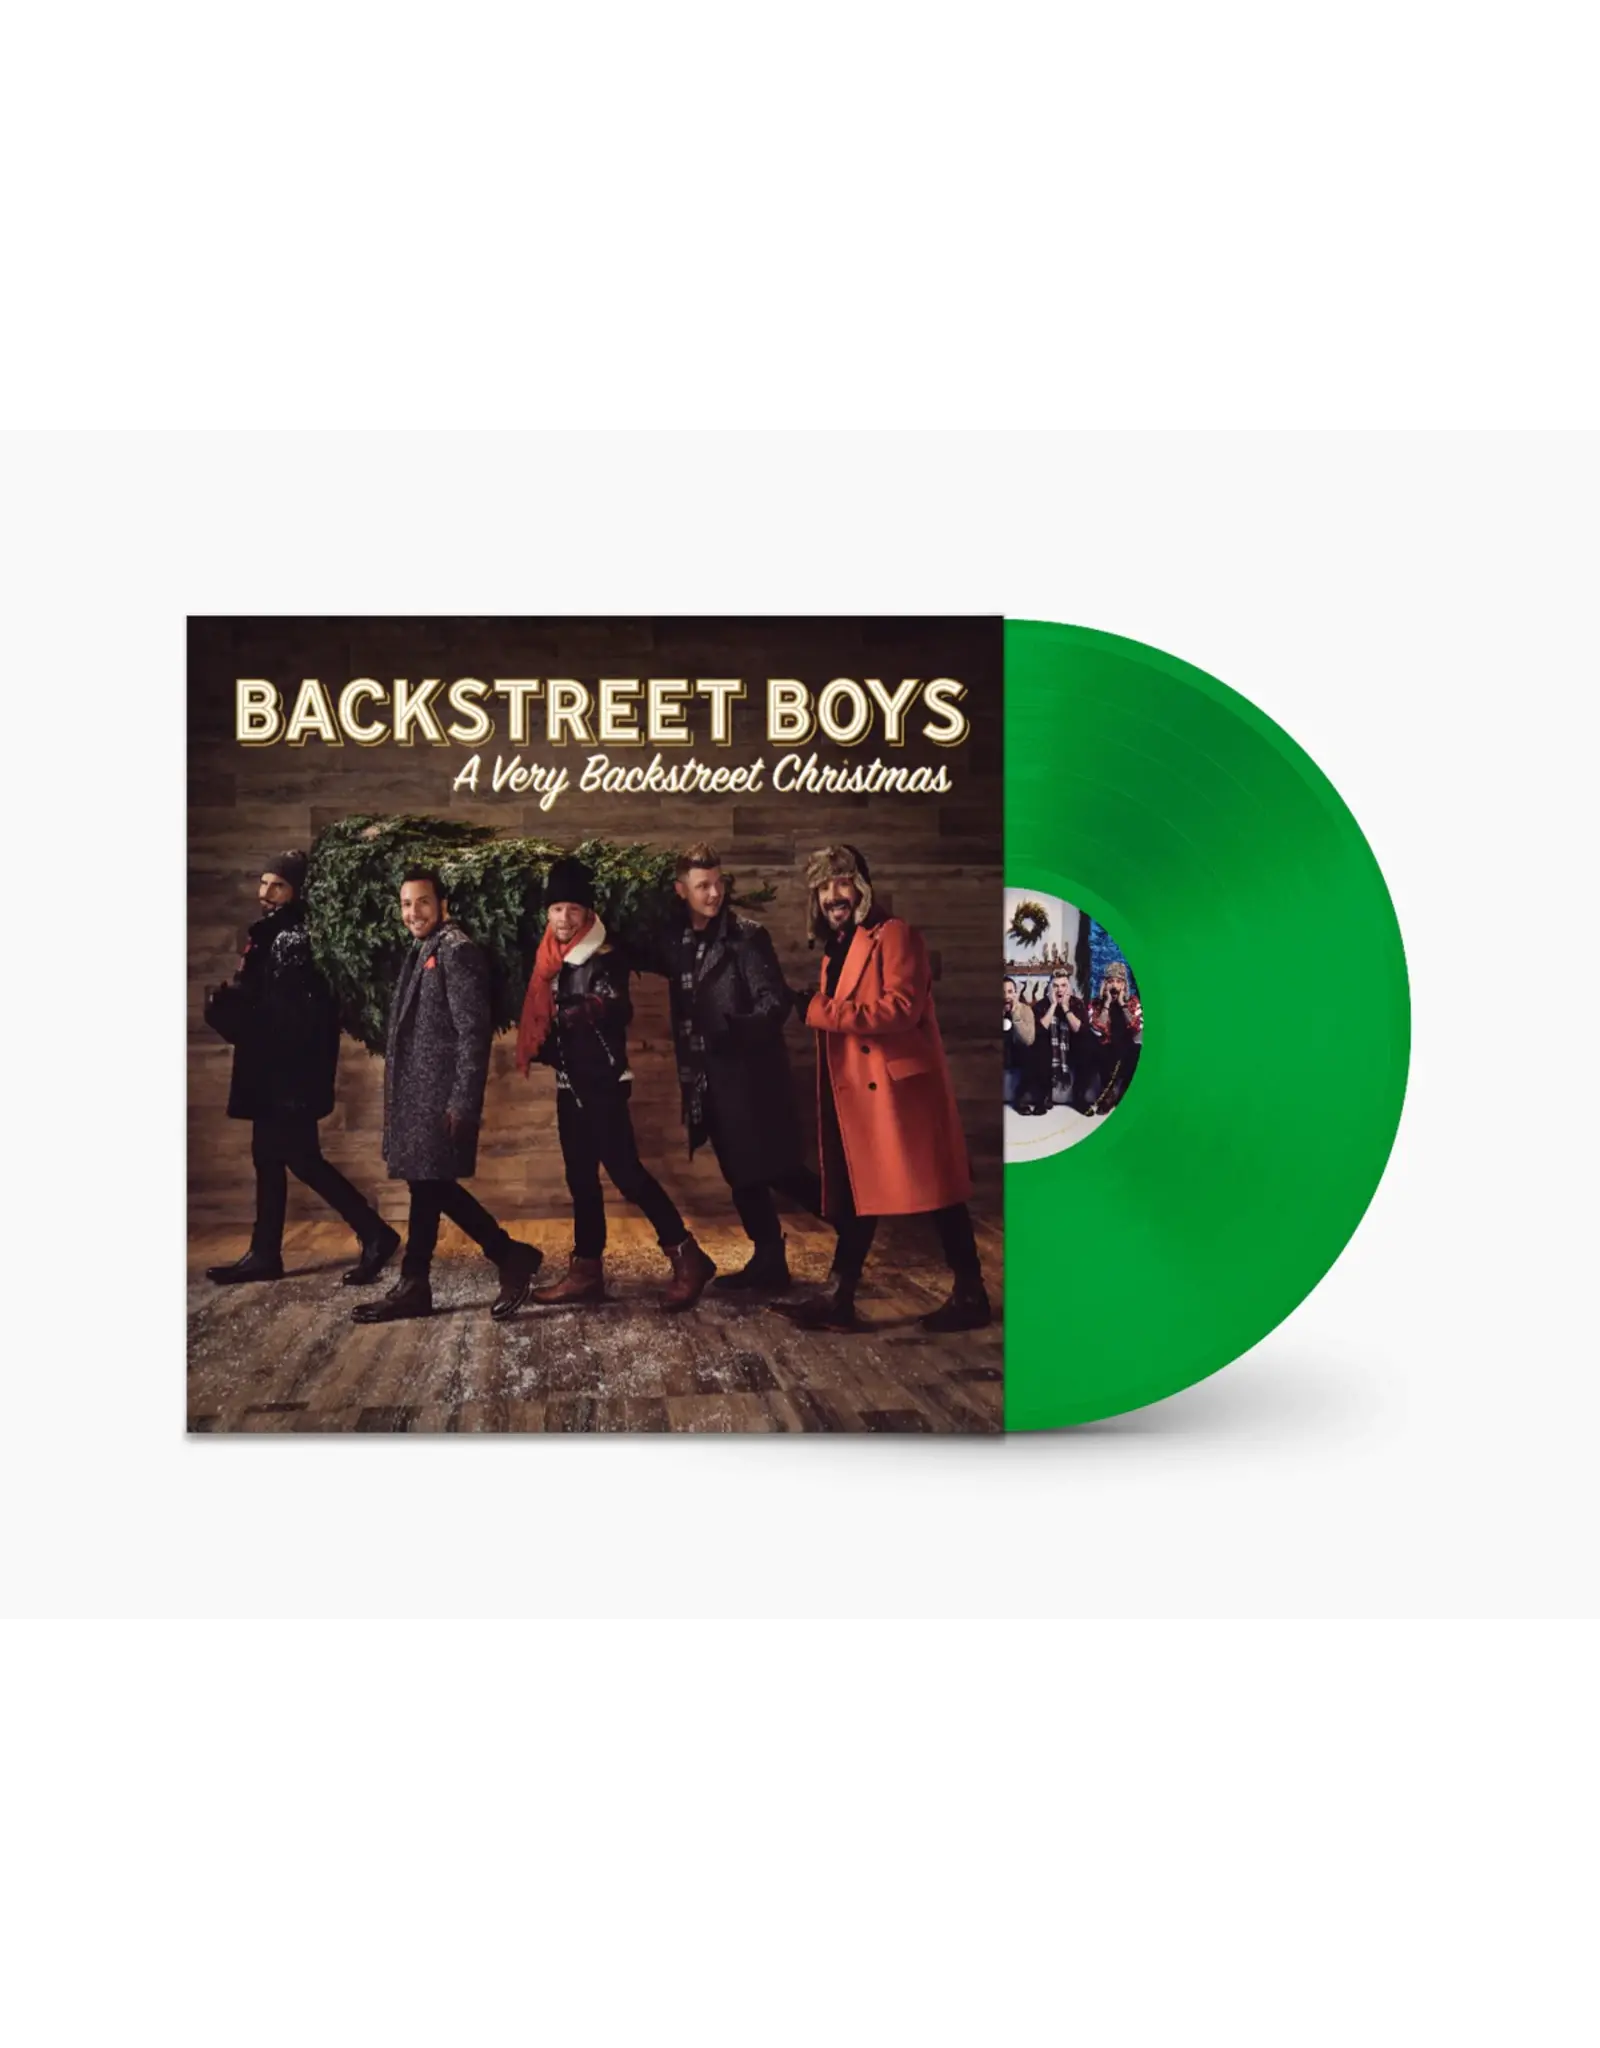 Backstreet Boys - A Very Backstreet Christmas (Deluxe Green Vinyl)